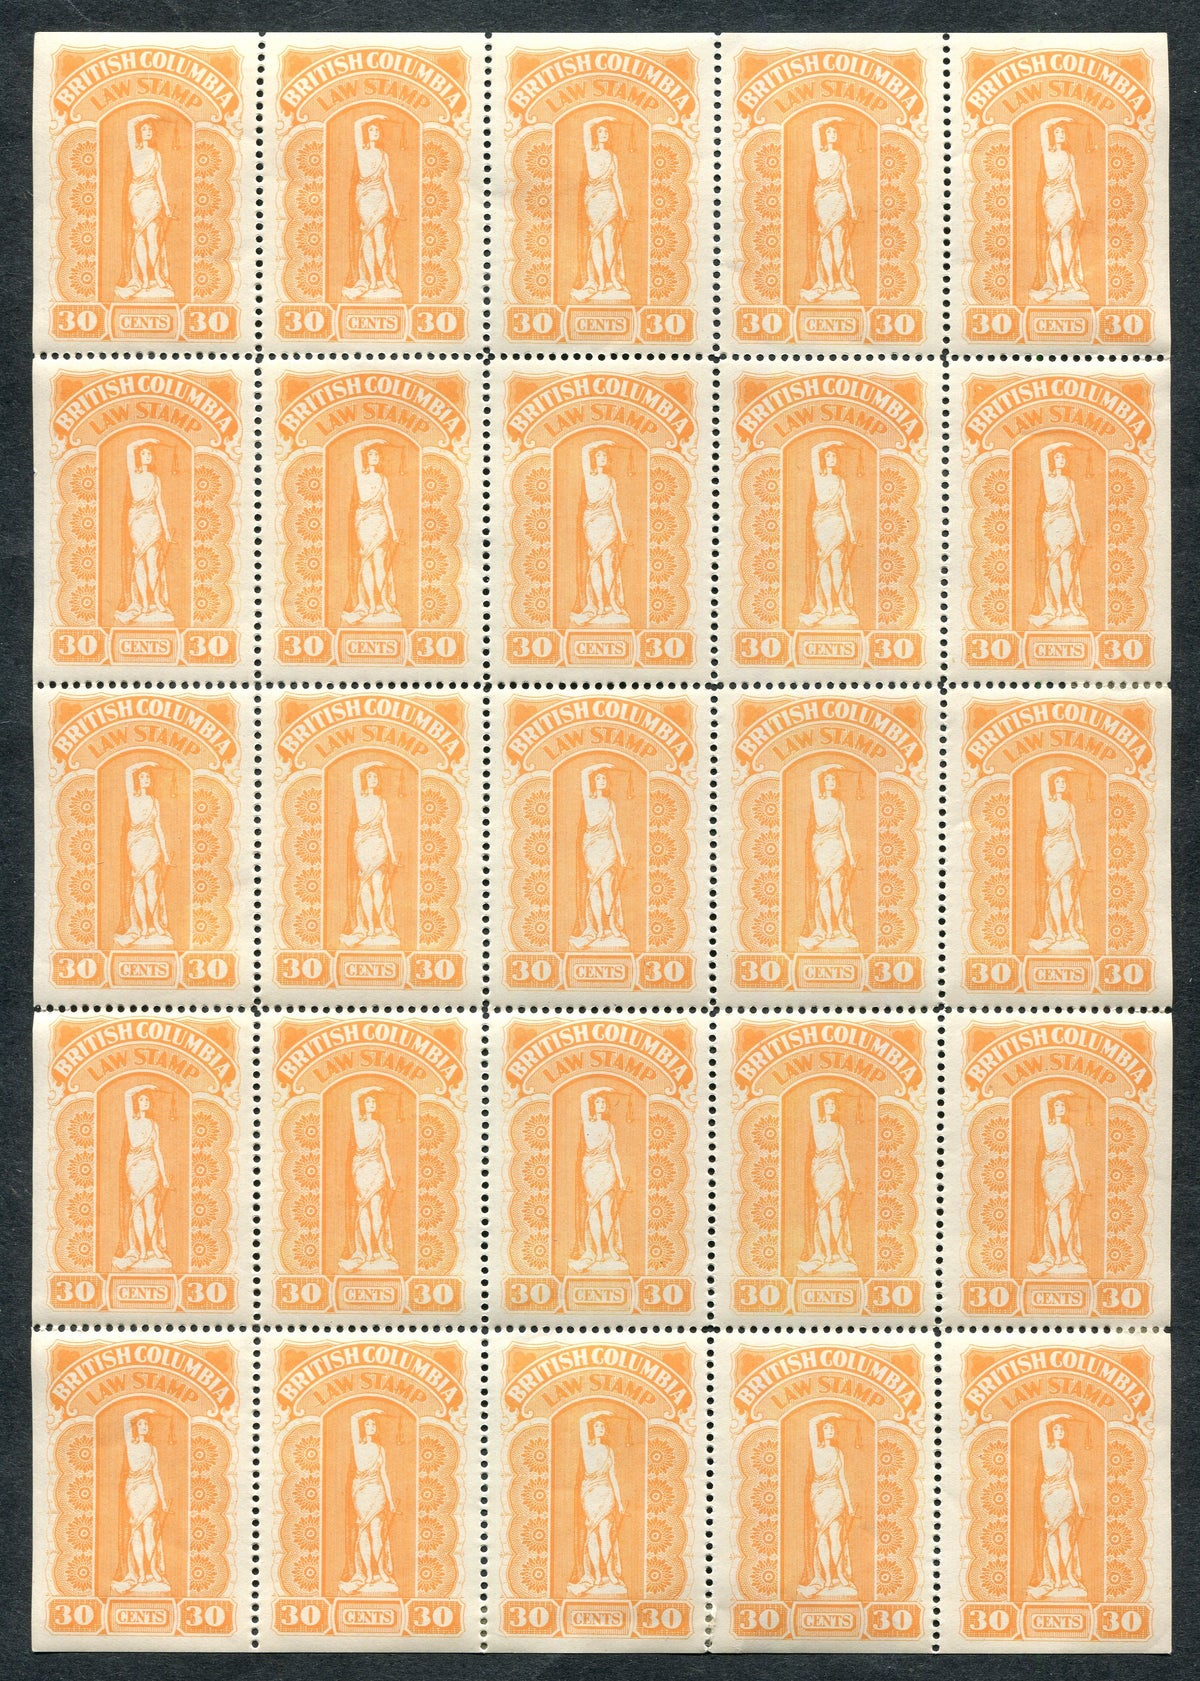 0029BC2404 - BCL29 - Mint Sheet of 25